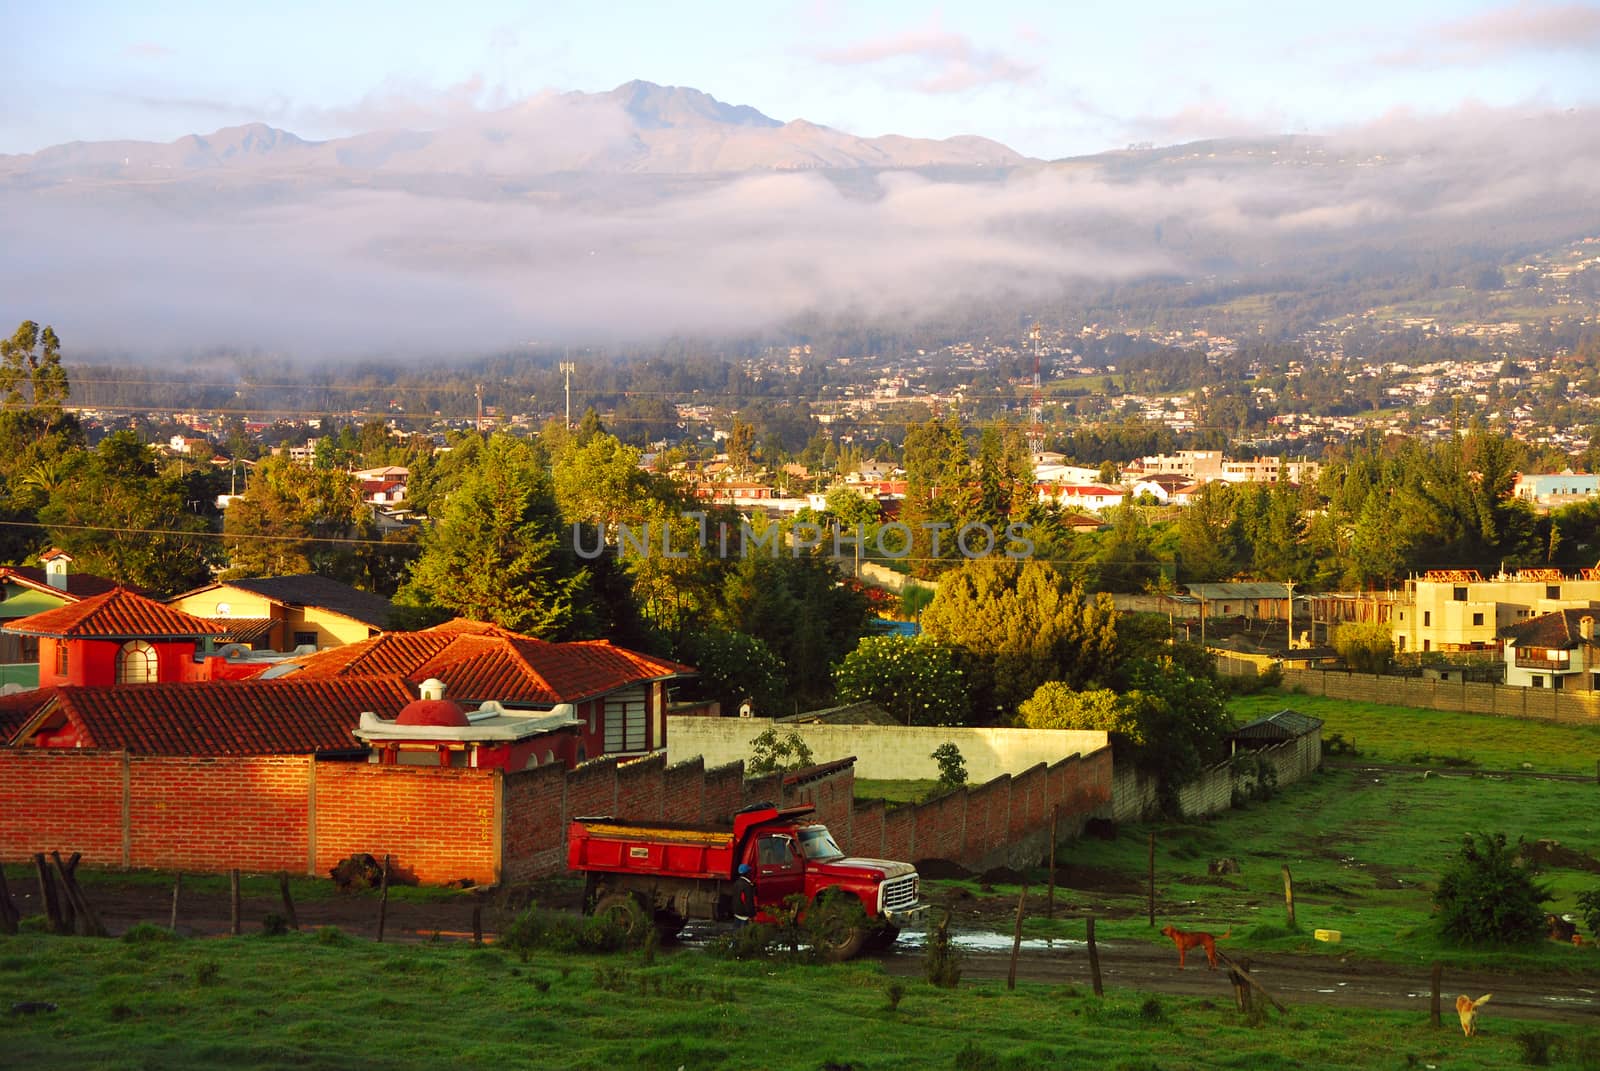 Town in the Andes, San Rafael, Ecuador, South America by xura